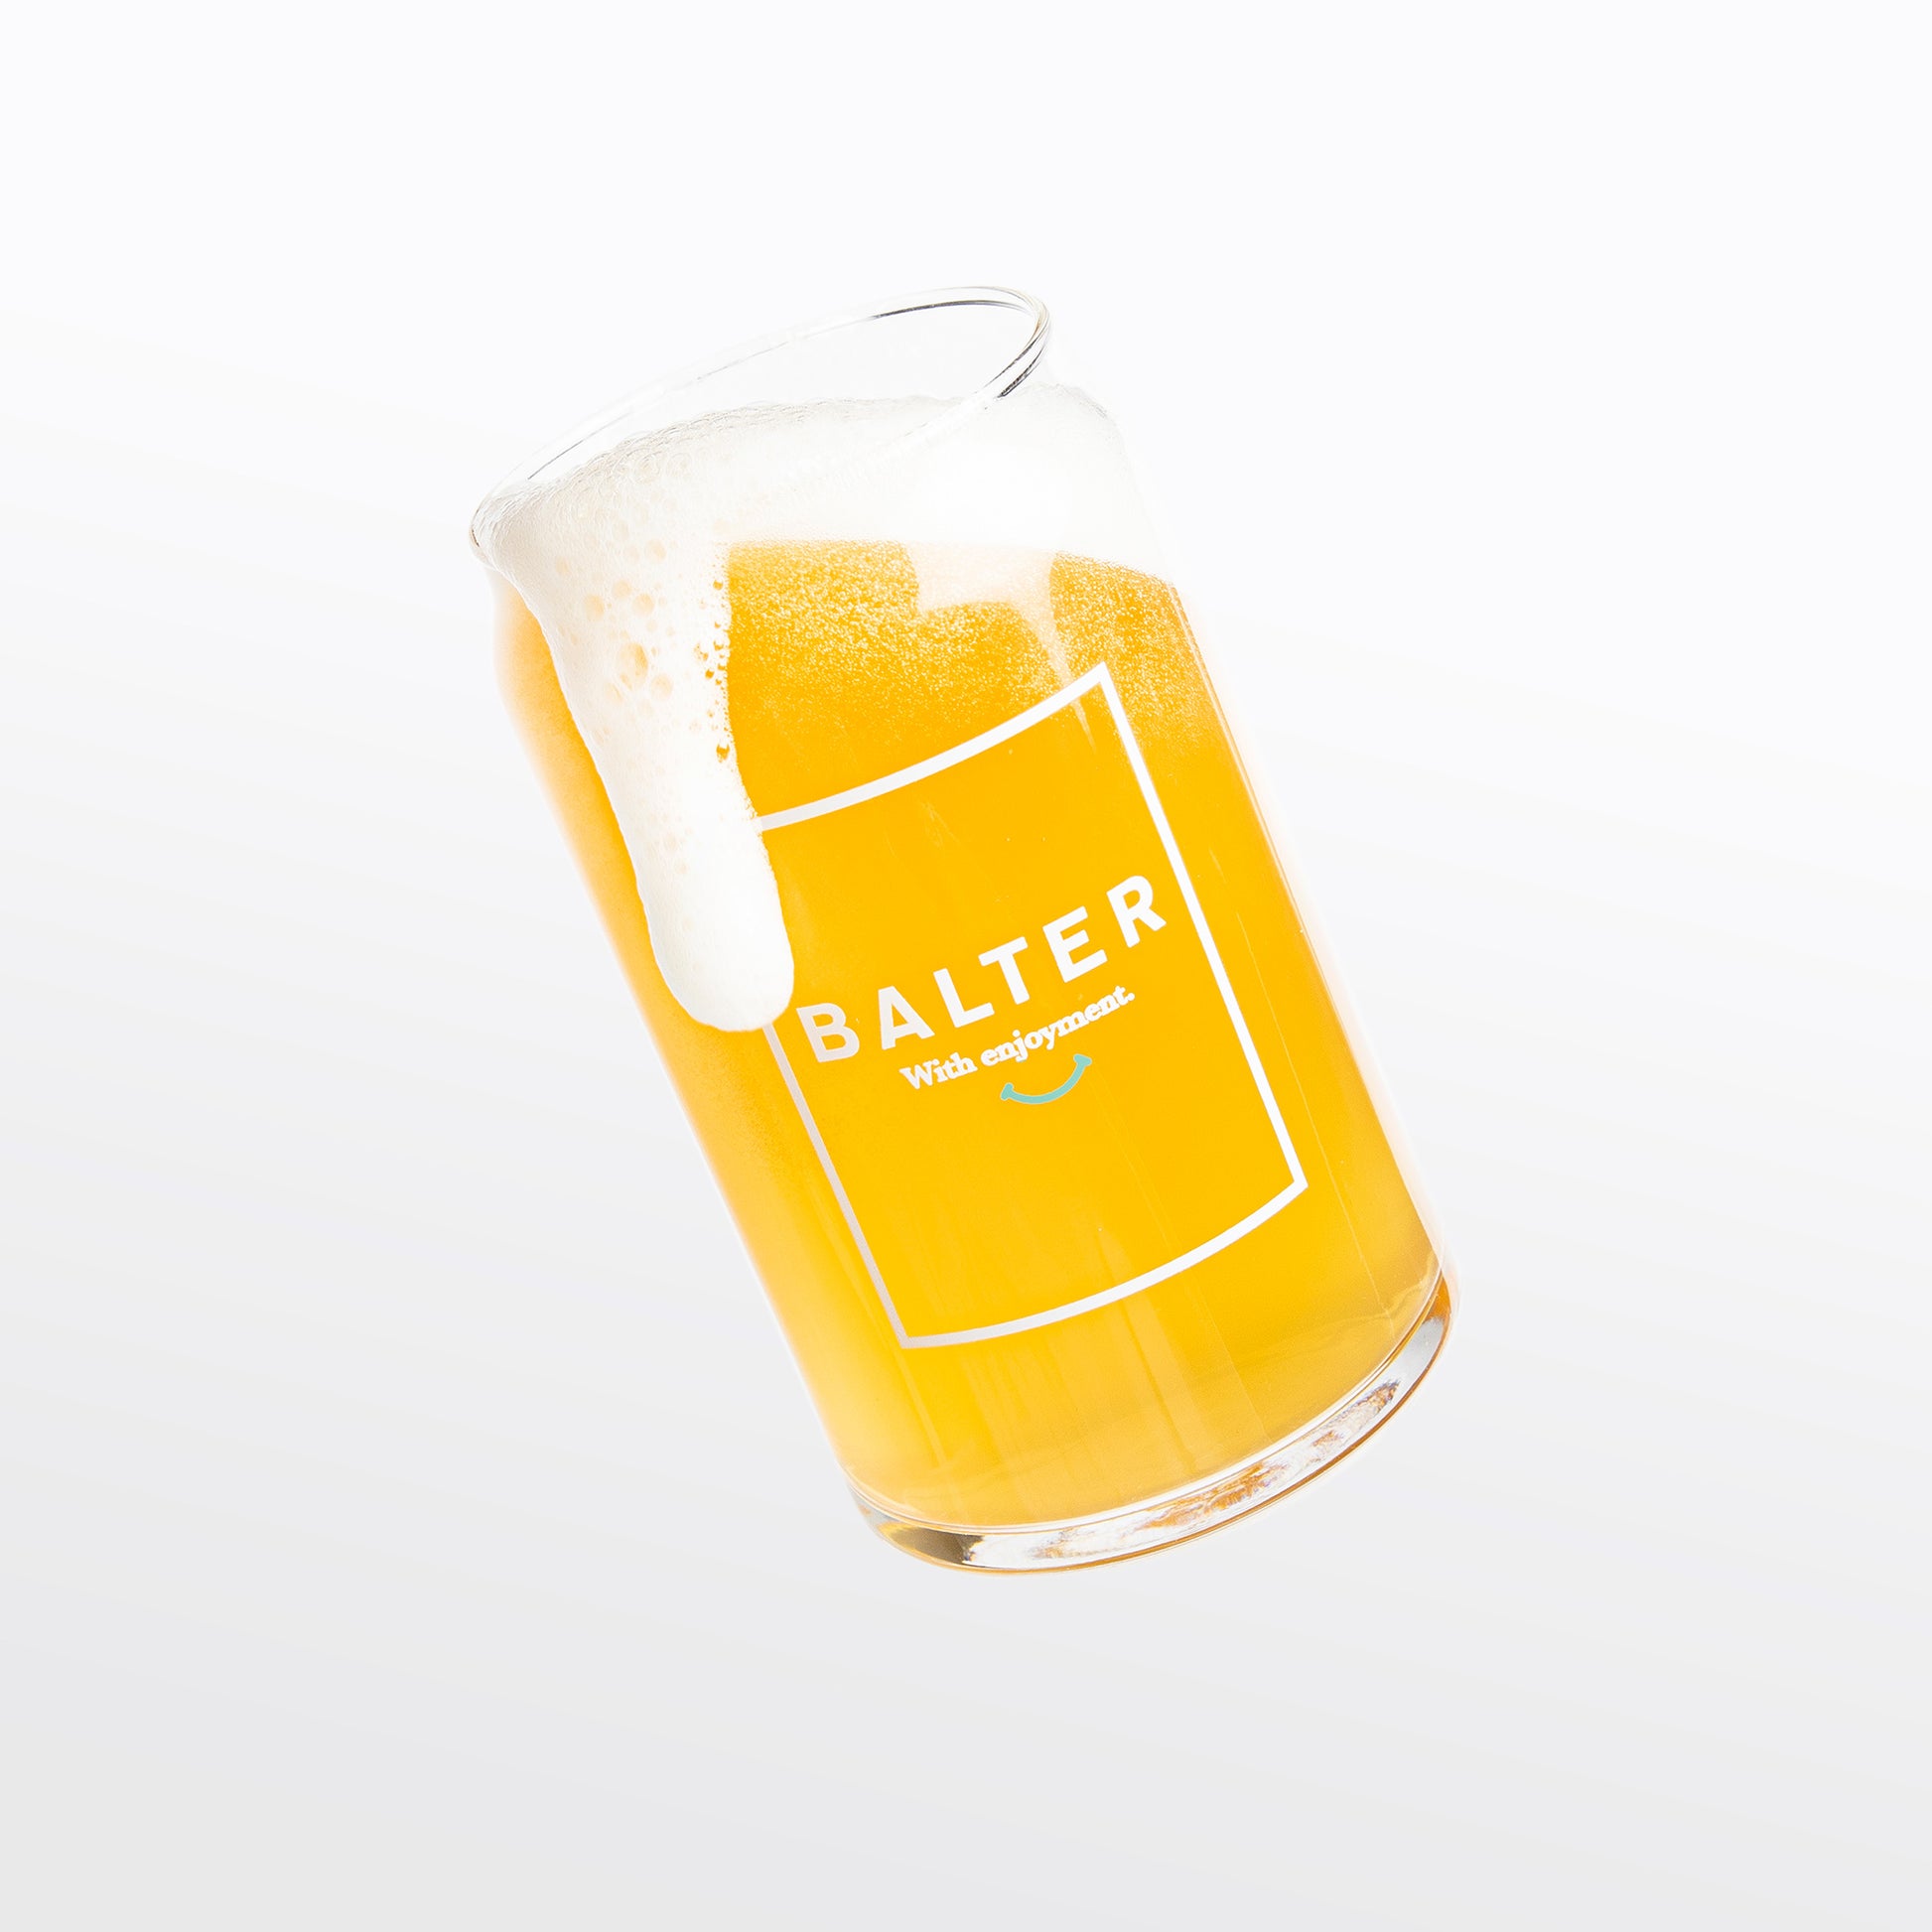 Single - Balter 16oz / 470ml 'Tinnie' Glass - Balter Brewing Company - Craft Beer Merch Australia